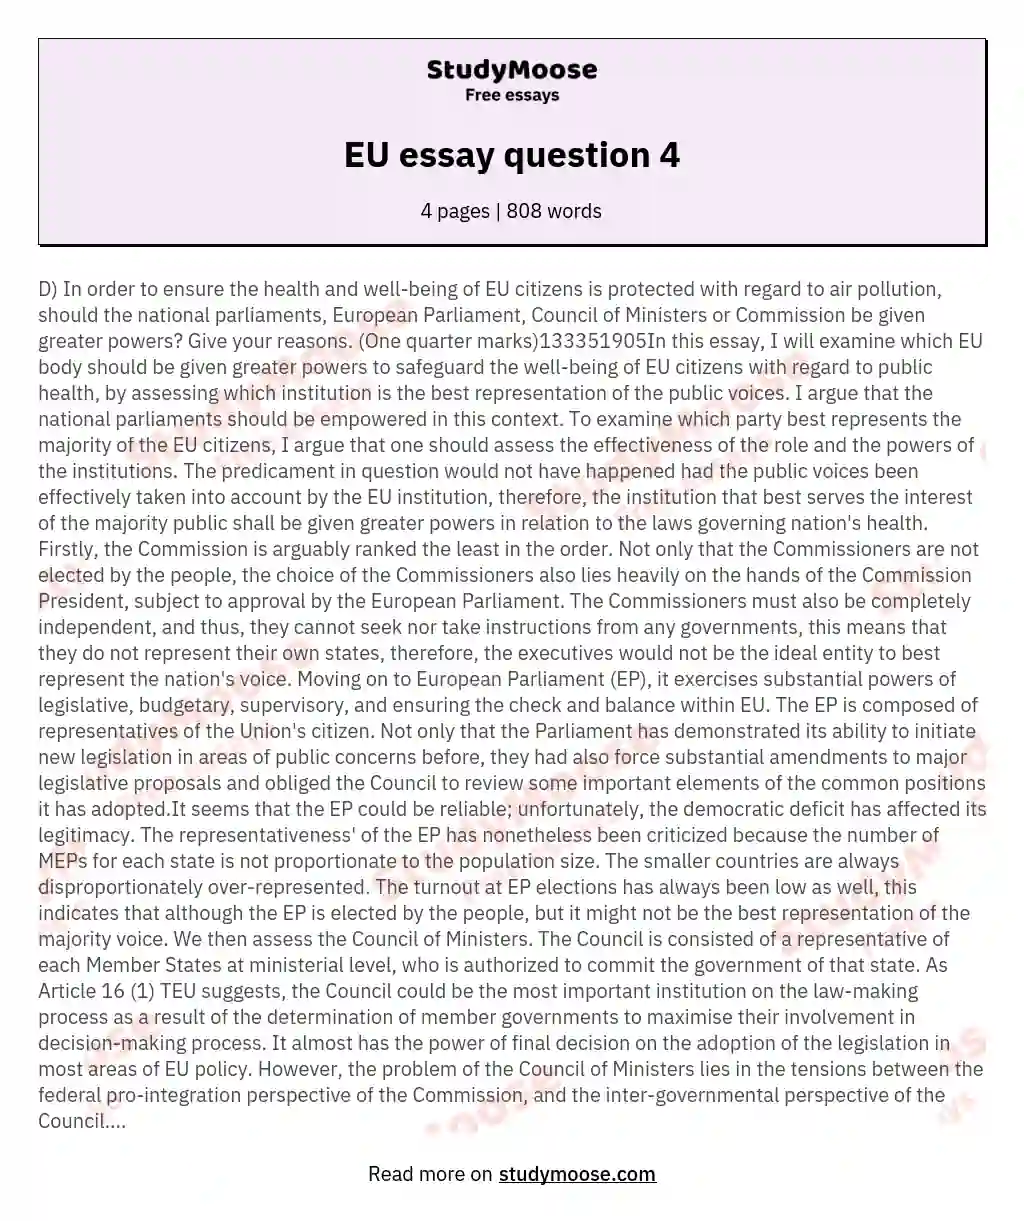 EU essay question 4 essay